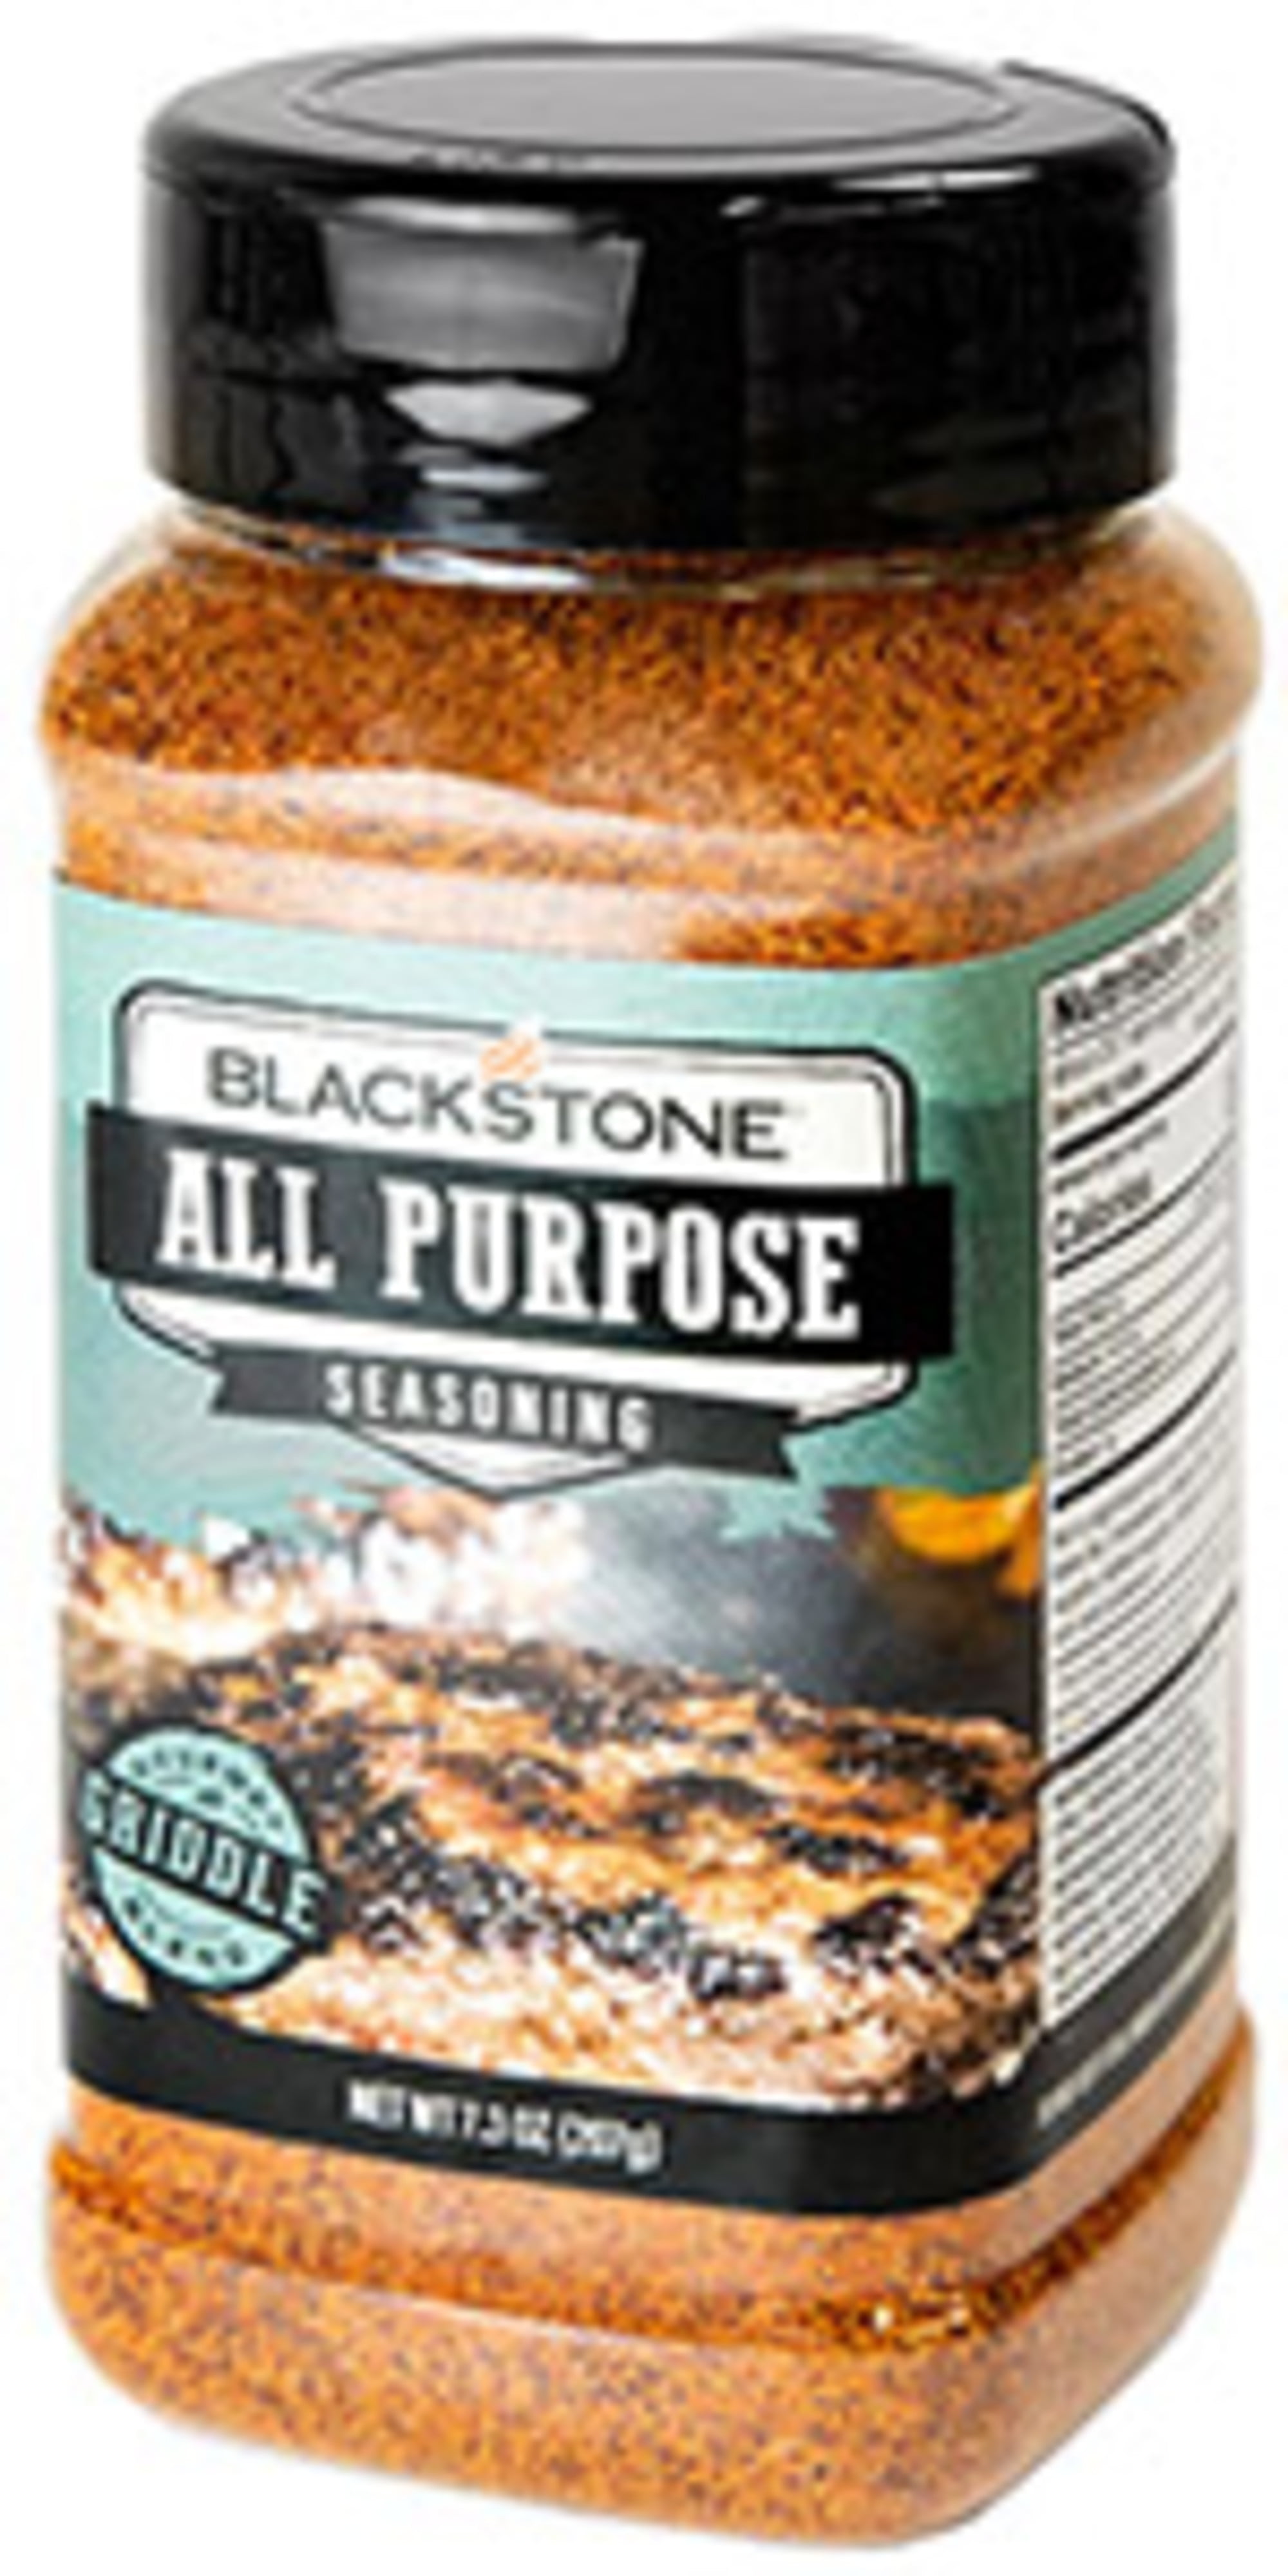 Blackstone All Purpose Gourmet Seasoning Mix, 7.3 oz